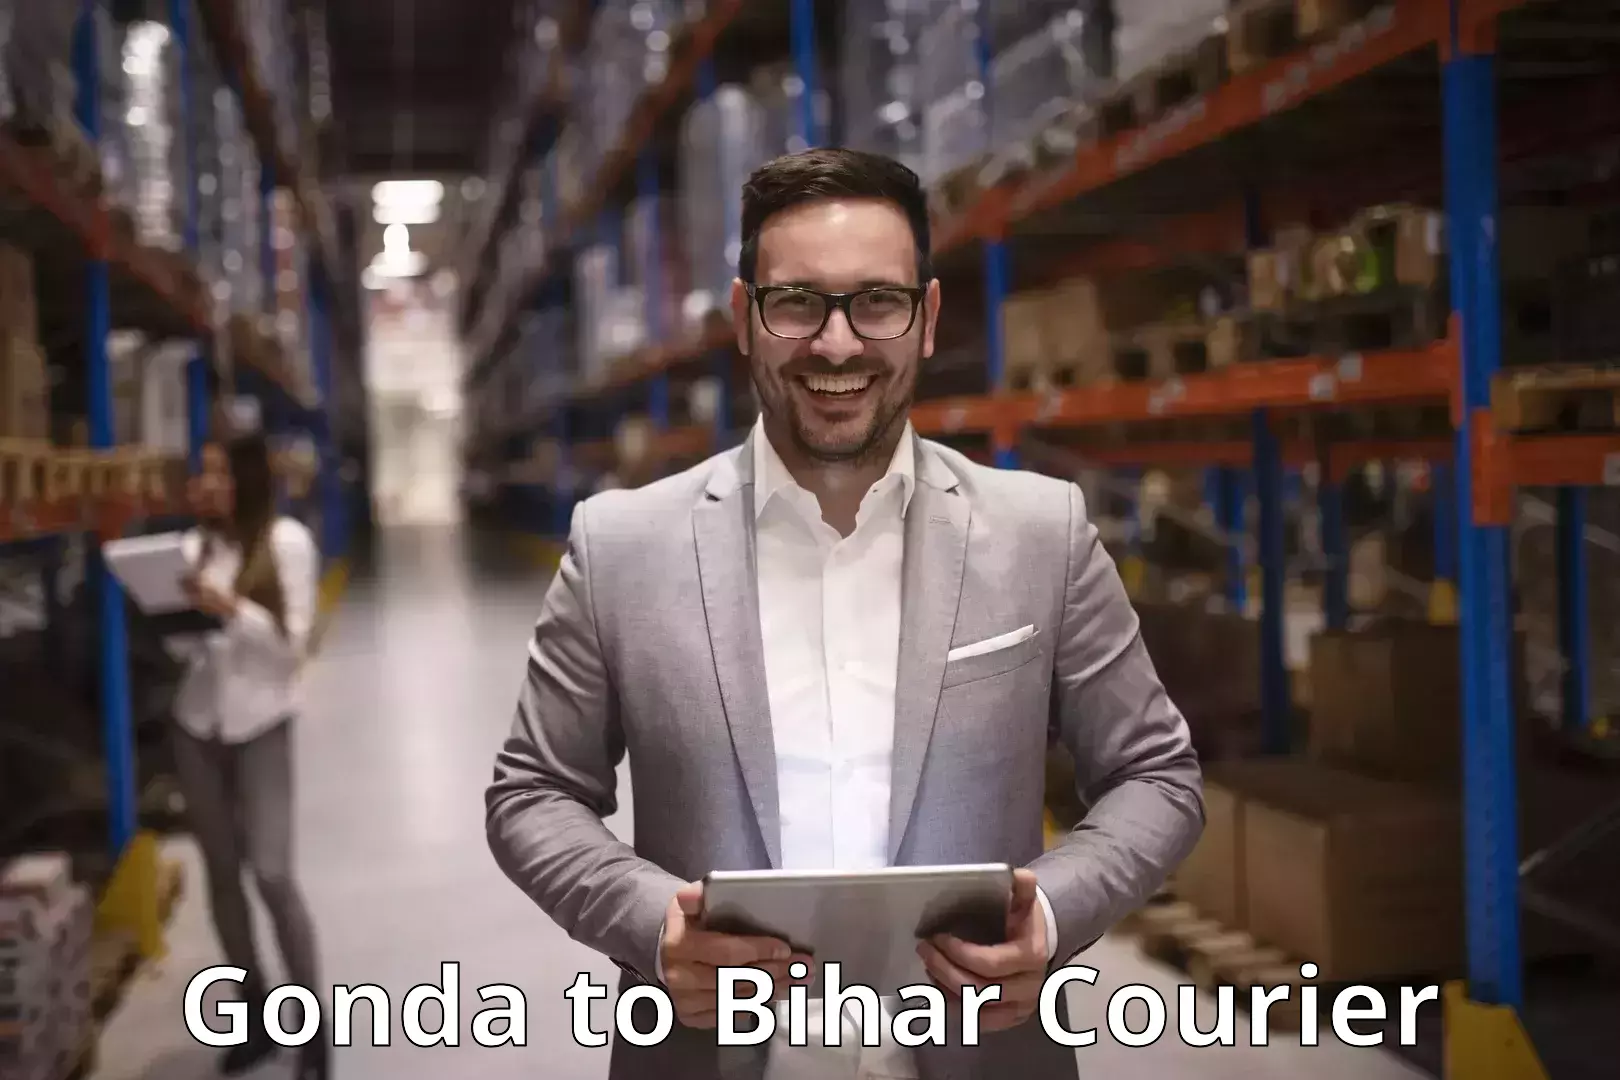 Digital courier platforms Gonda to Patna